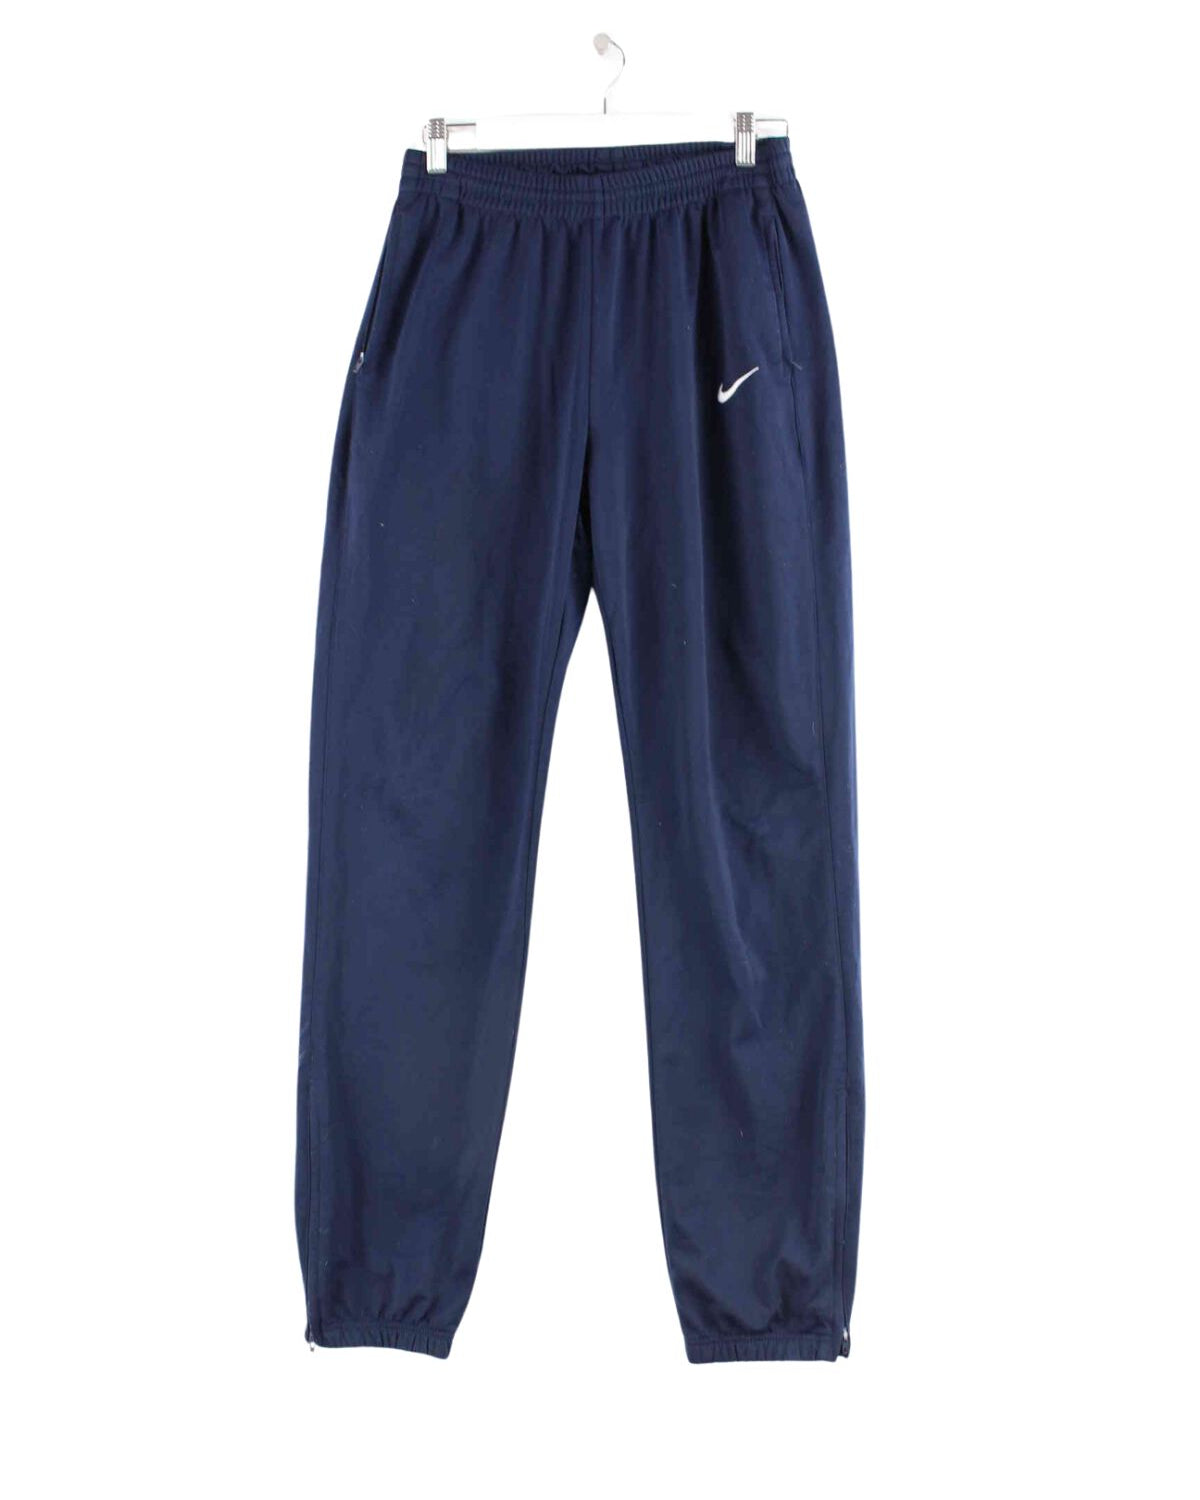 Nike Damen Track Pants Blau M (front image)